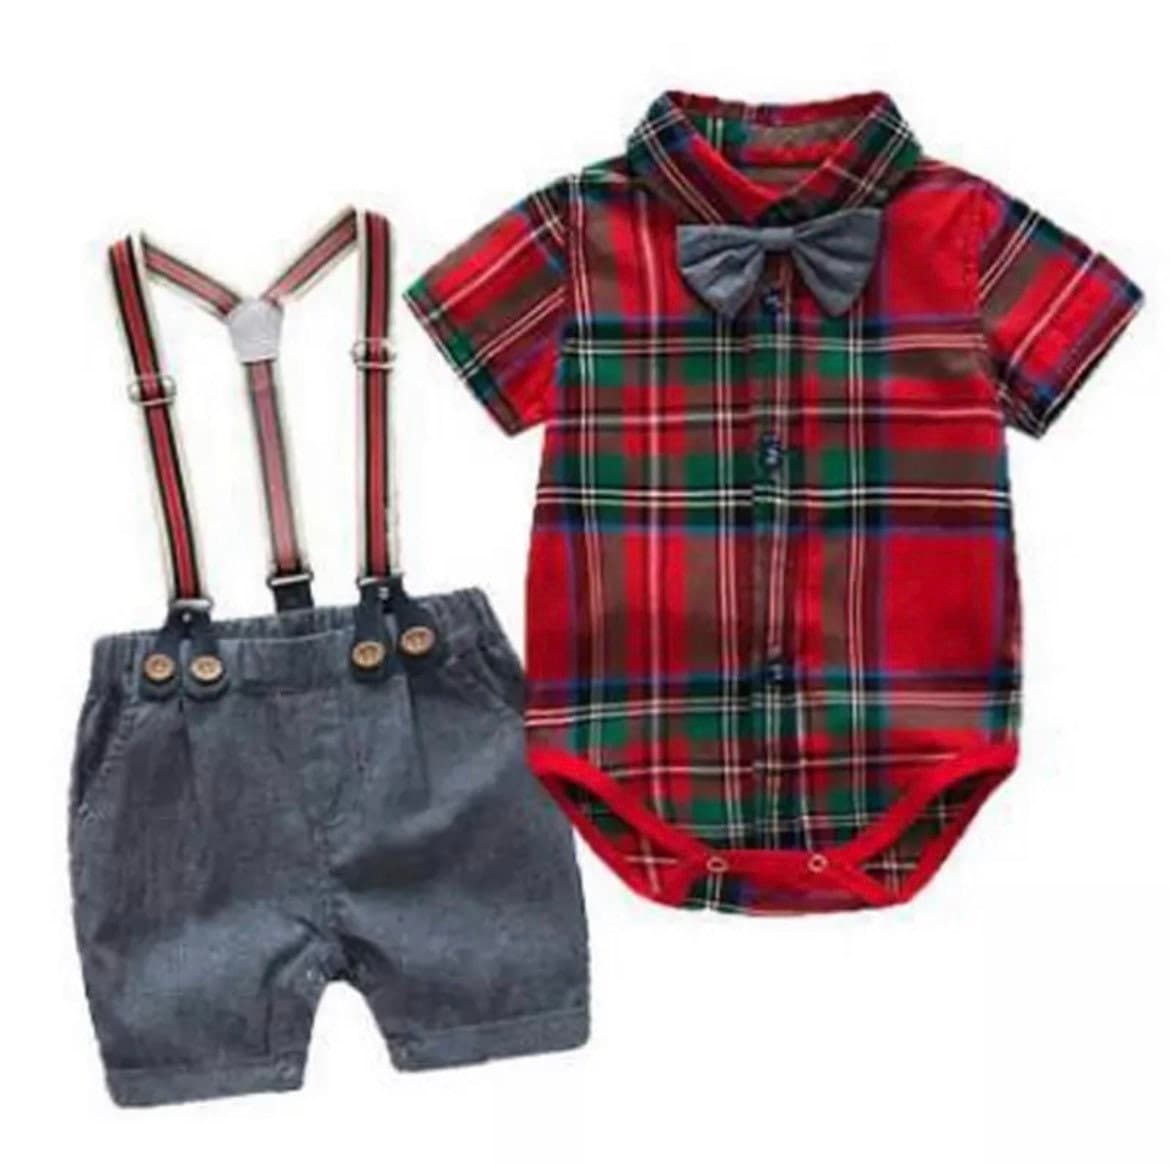 Venice - Baby Boy Summer Suit Set with Shorts + Bowtie + Suspenders.